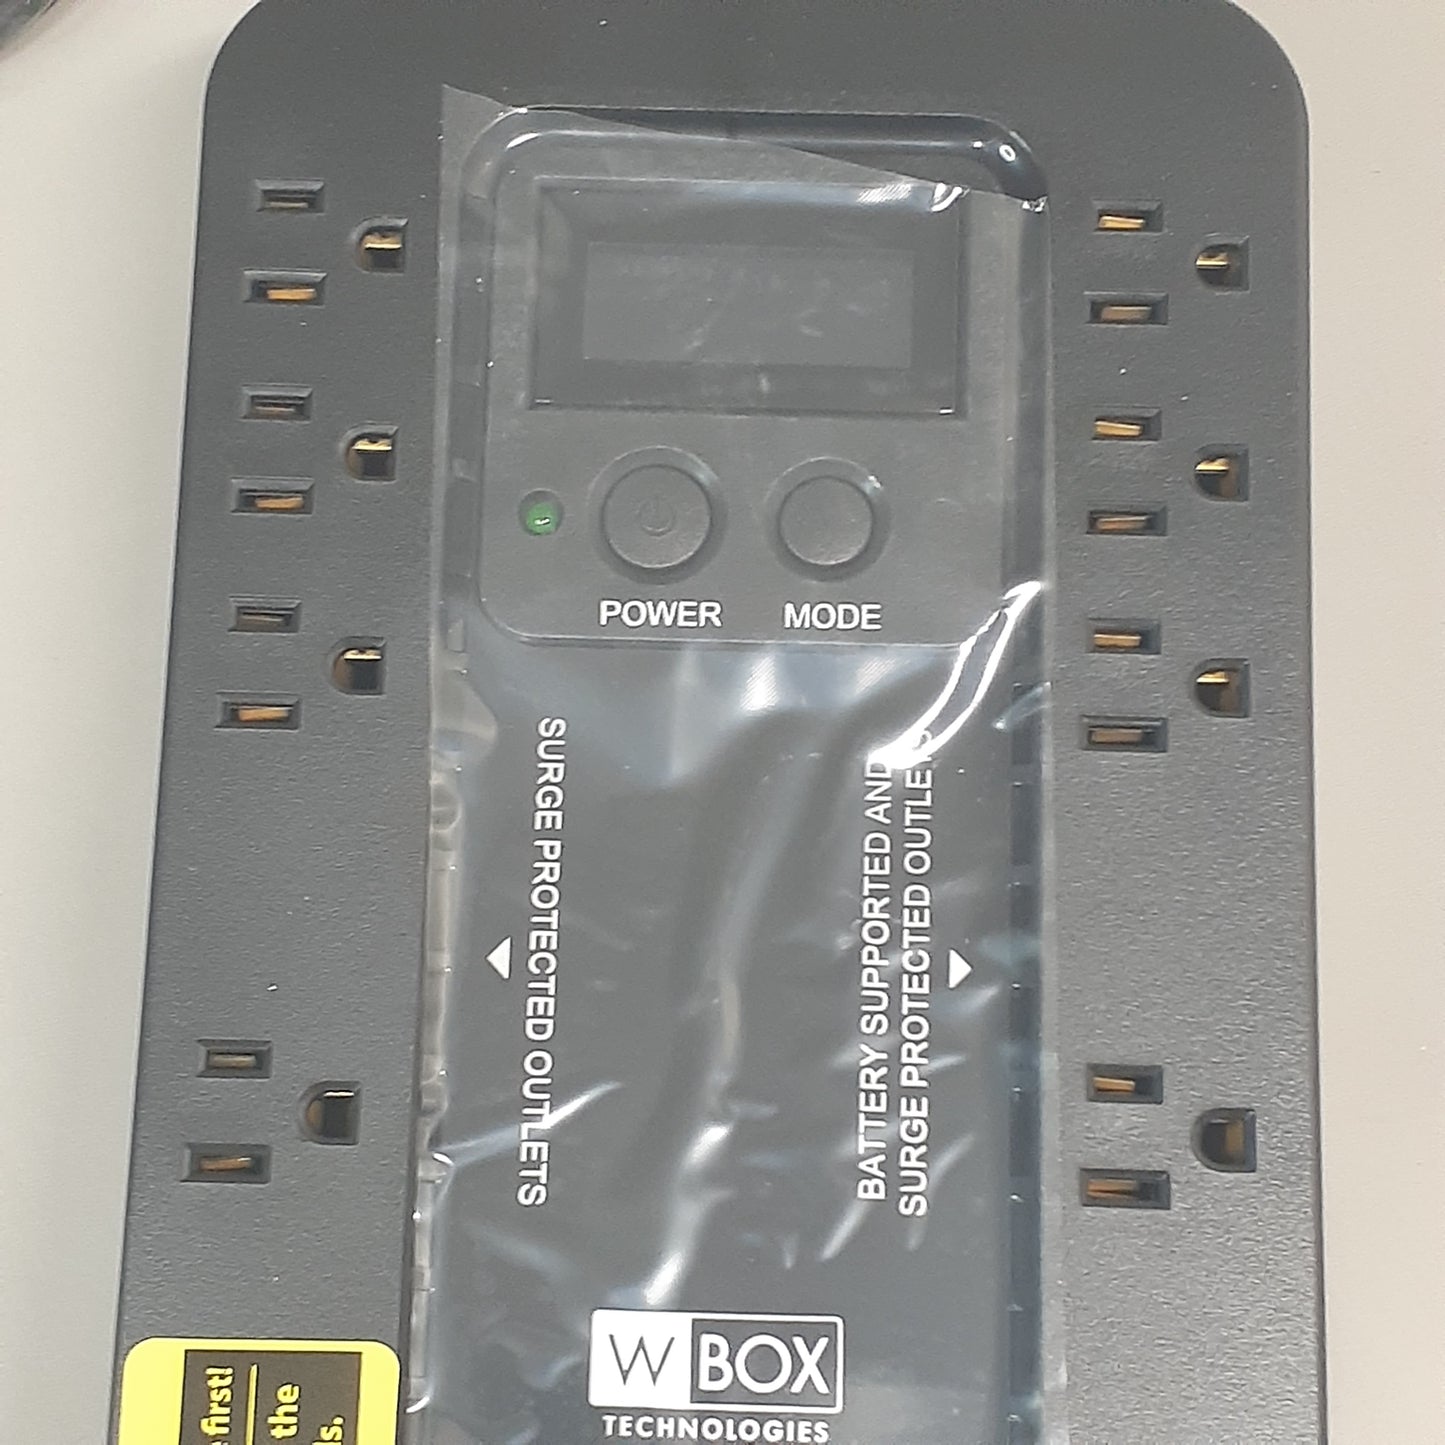 W BOX Battery Backup Standby UPS, 625VA, 390W (New)